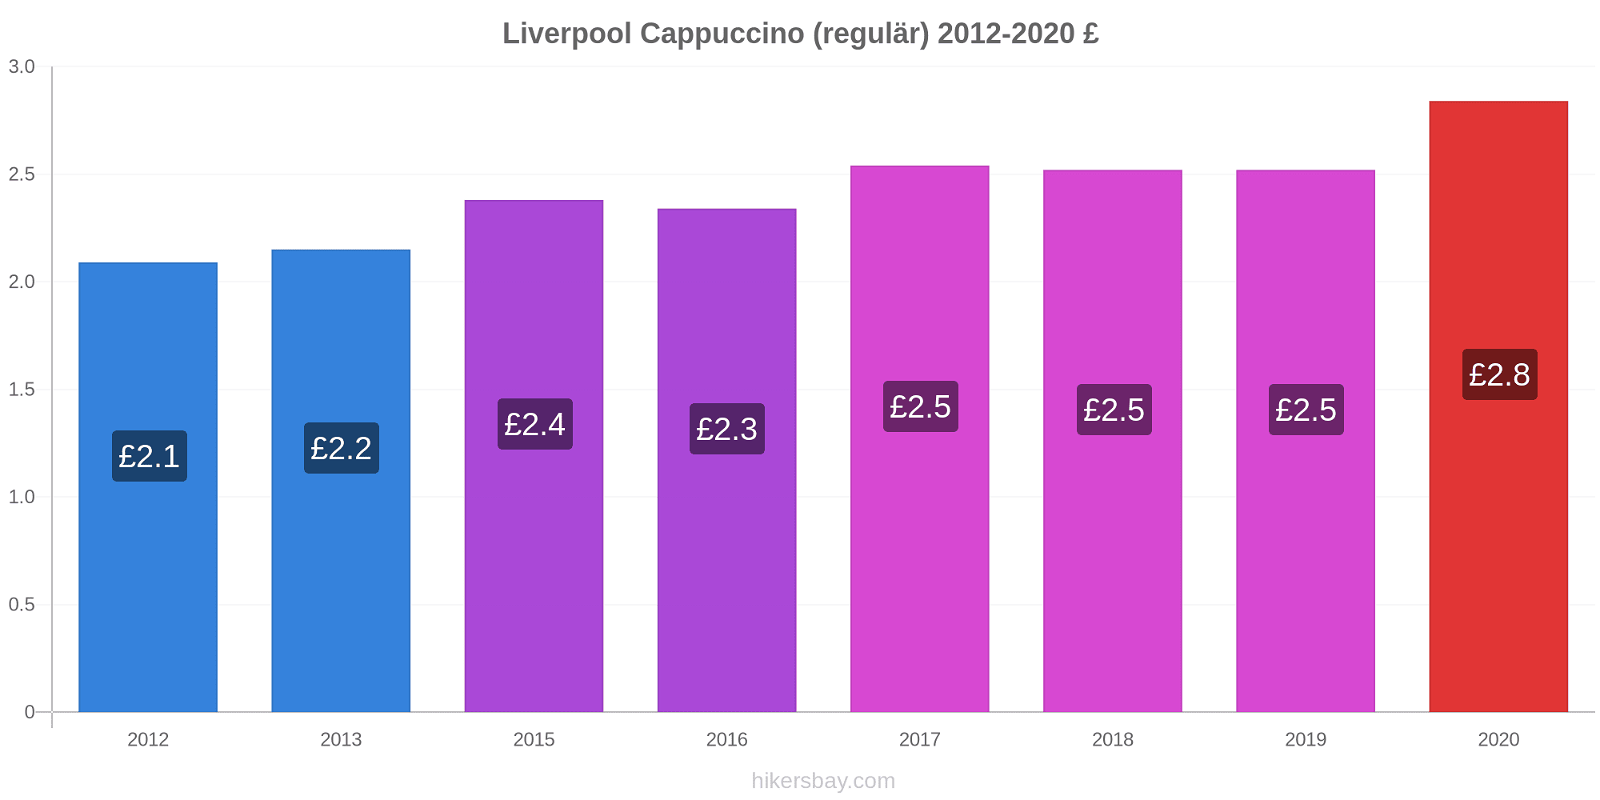 Liverpool Preisänderungen Cappuccino (regulär) hikersbay.com